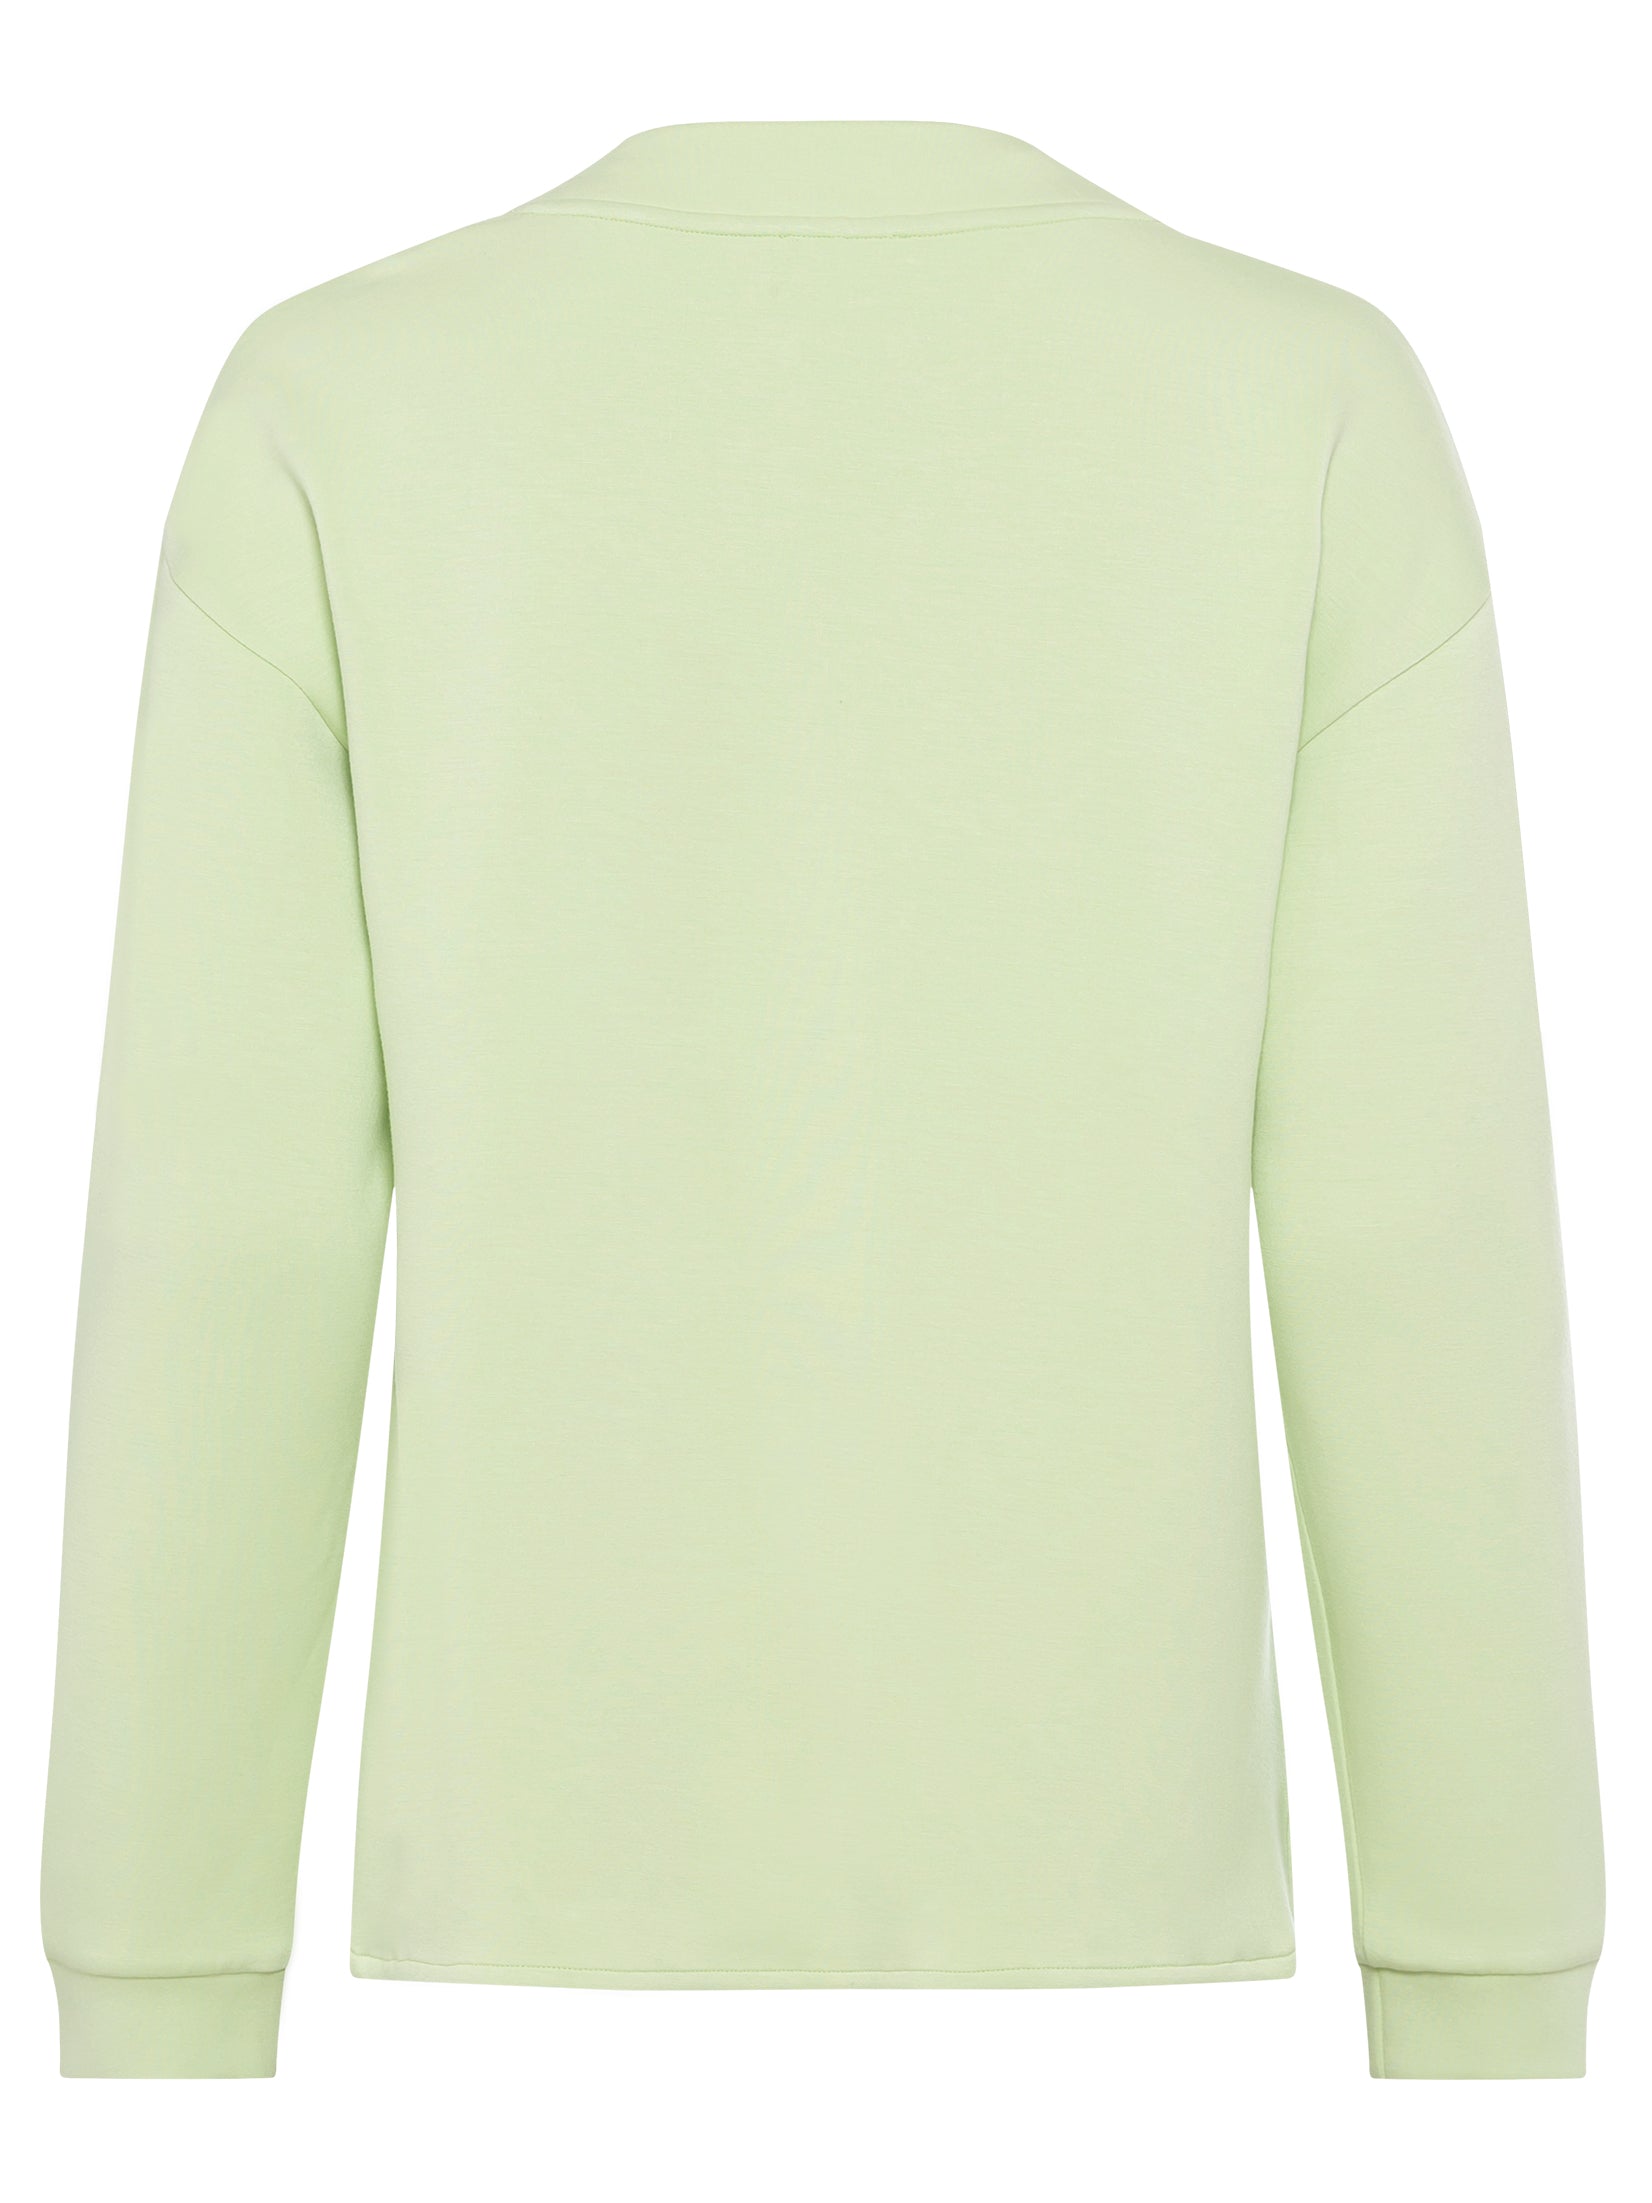 Long Sleeve Sweatshirt in Light Lime